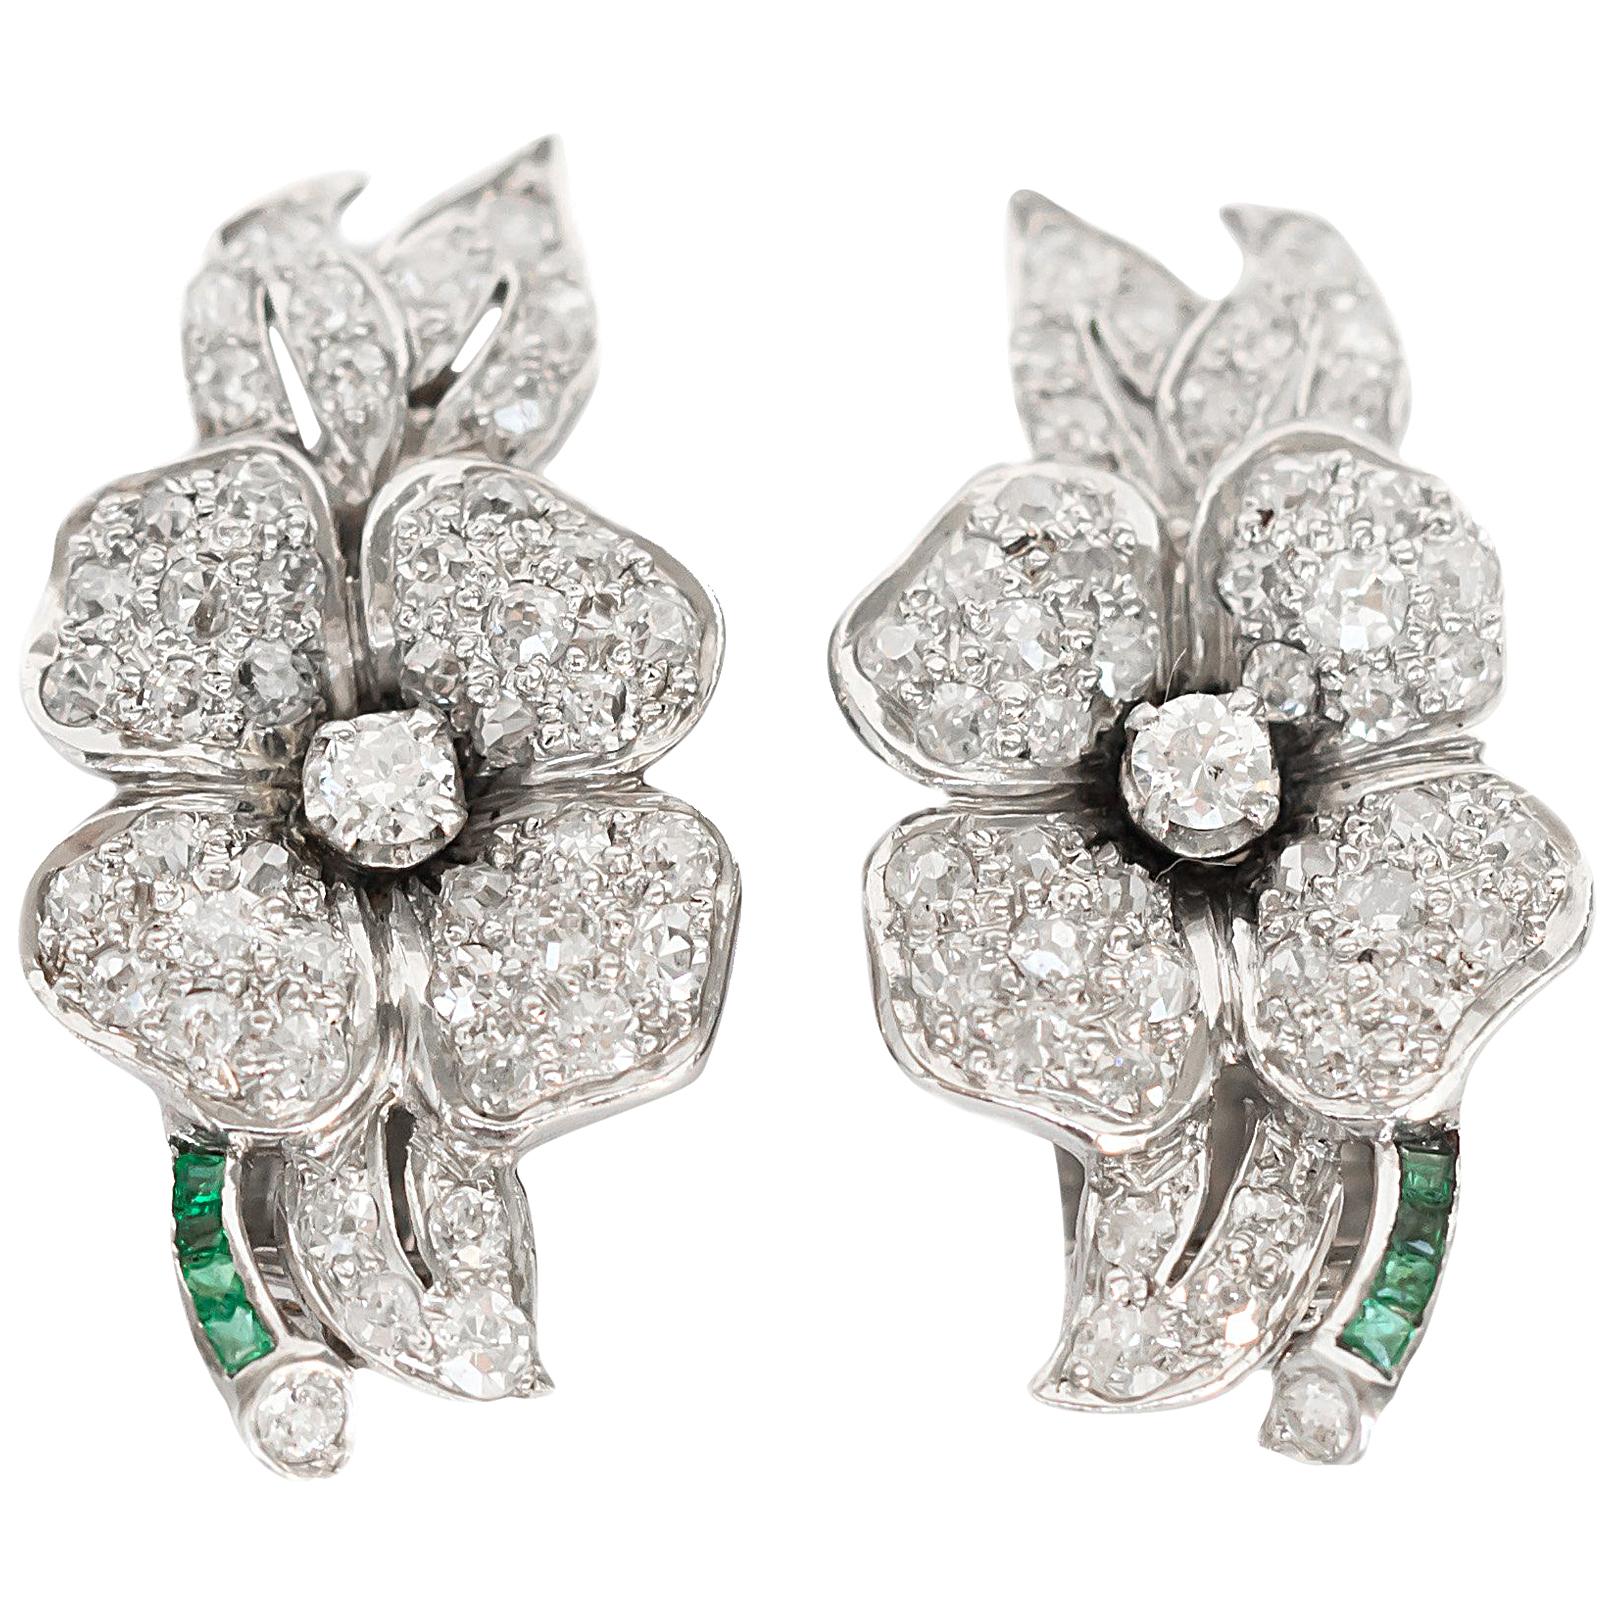 Diamond and Emerald Earrings